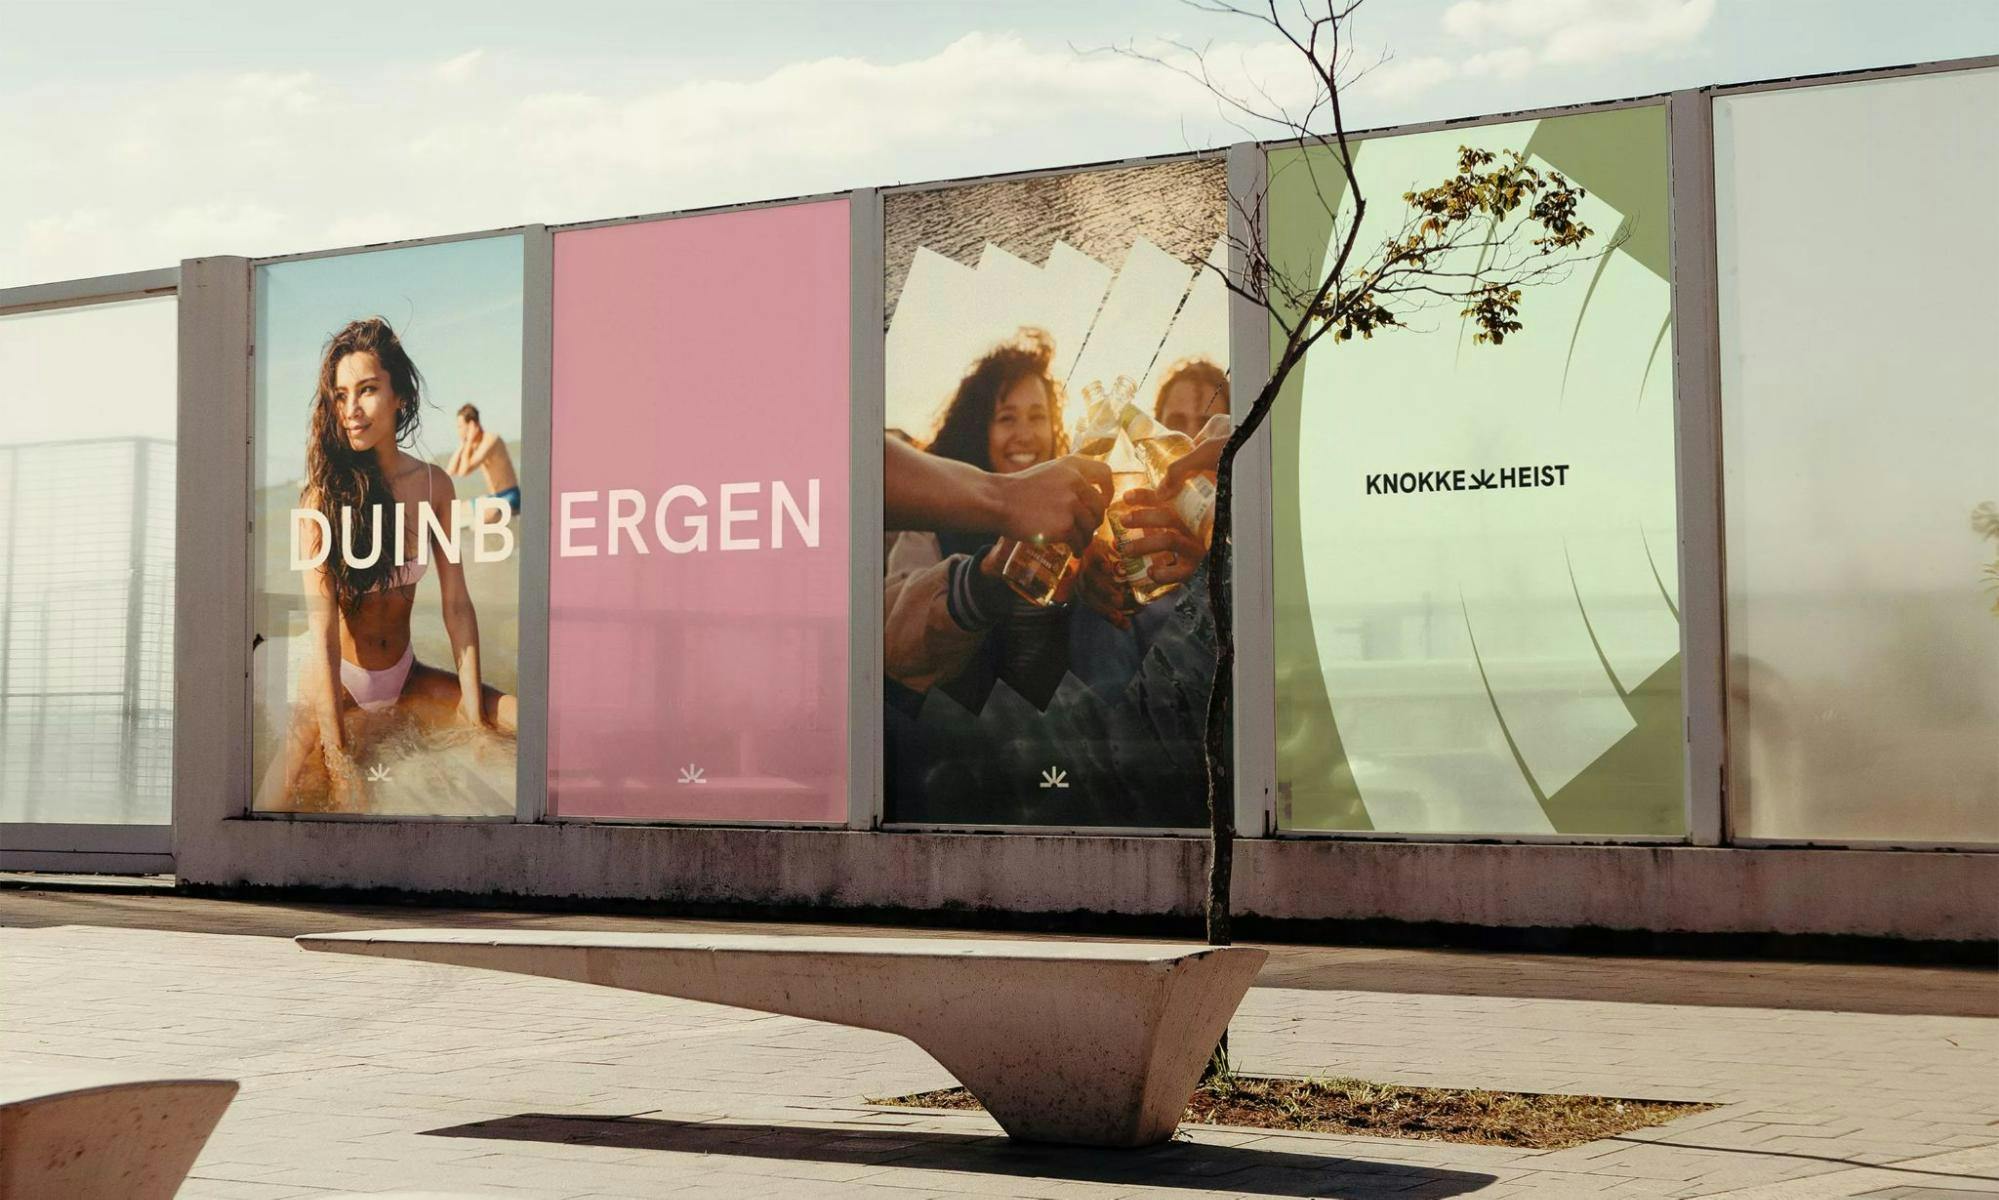 Knokke-Heist billboards